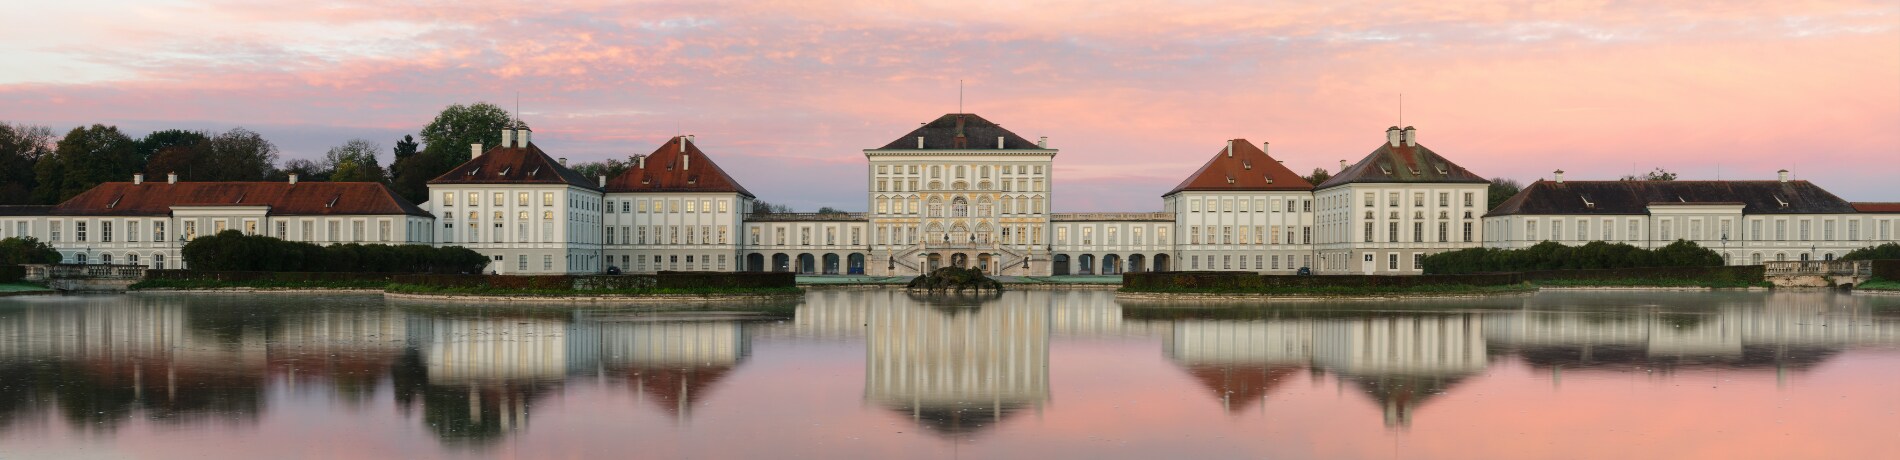 Palazzo di Nymphenburg, Baviera, Germania | Eden viaggi